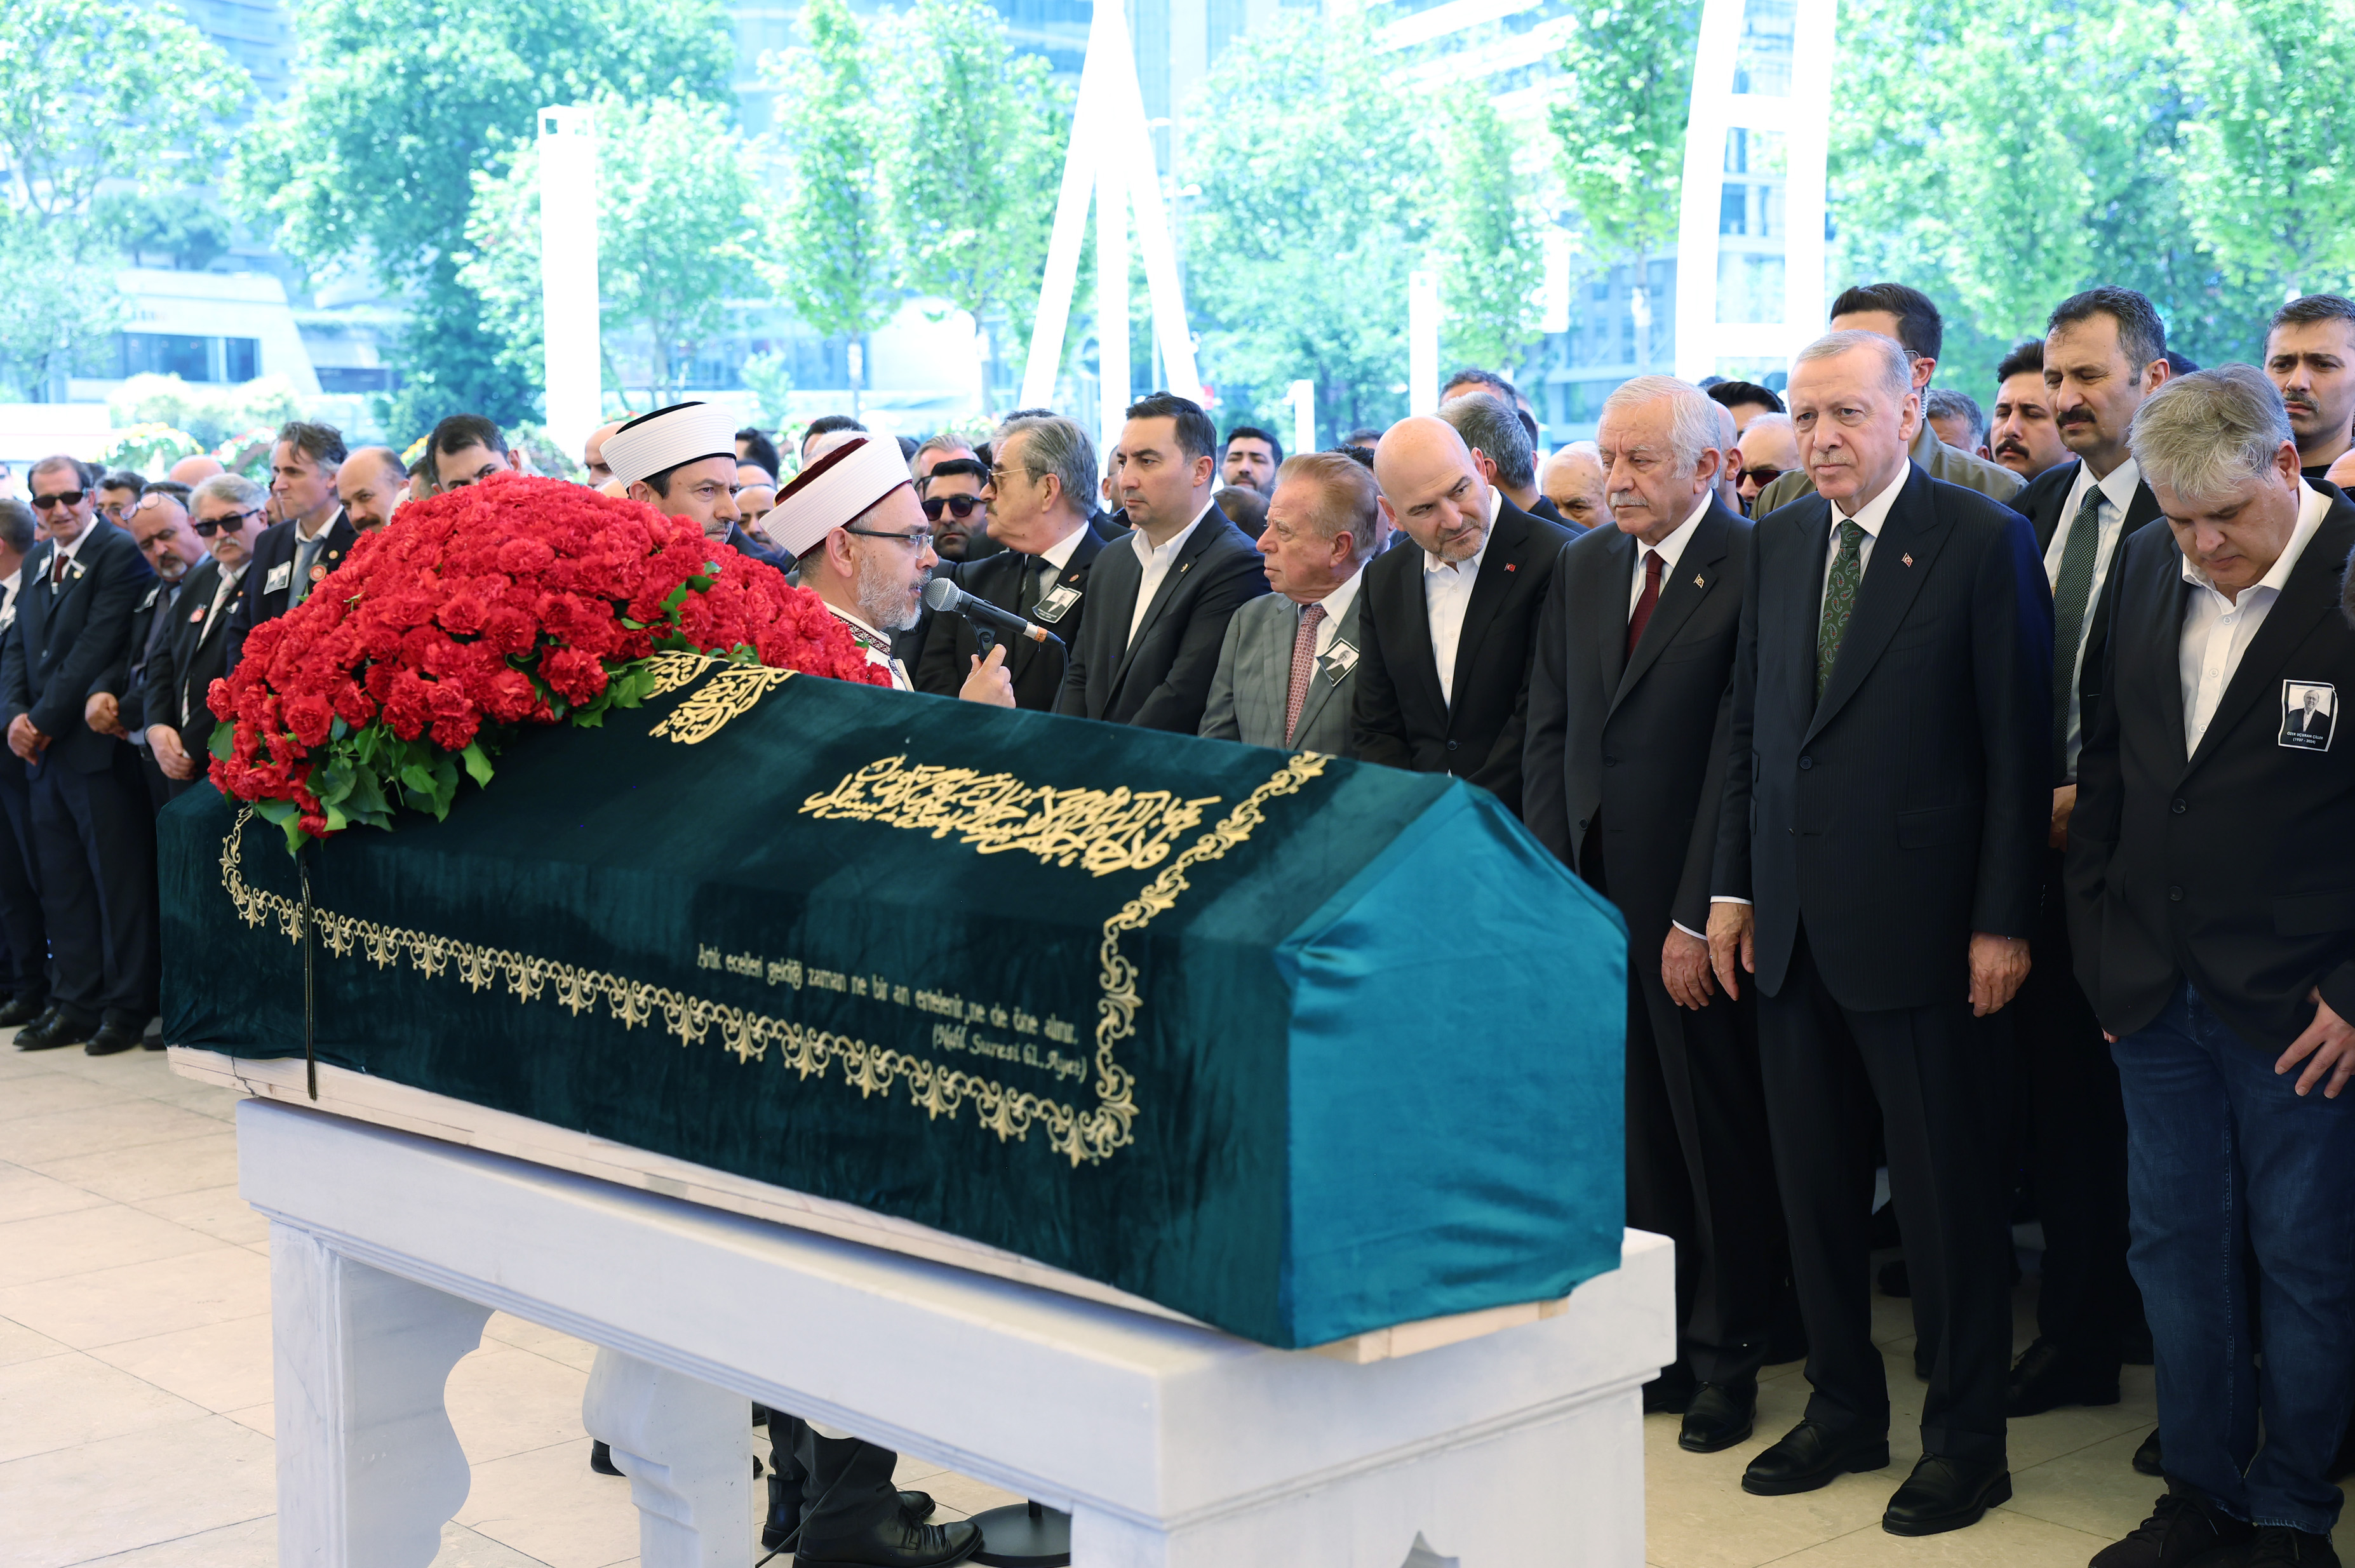 aa-20240603-34764653-34764648-turkish-president-recep-tayyip-erdogan-attends-funeral-of-ozer-ucuran-ciller-in-istanbul.jpg